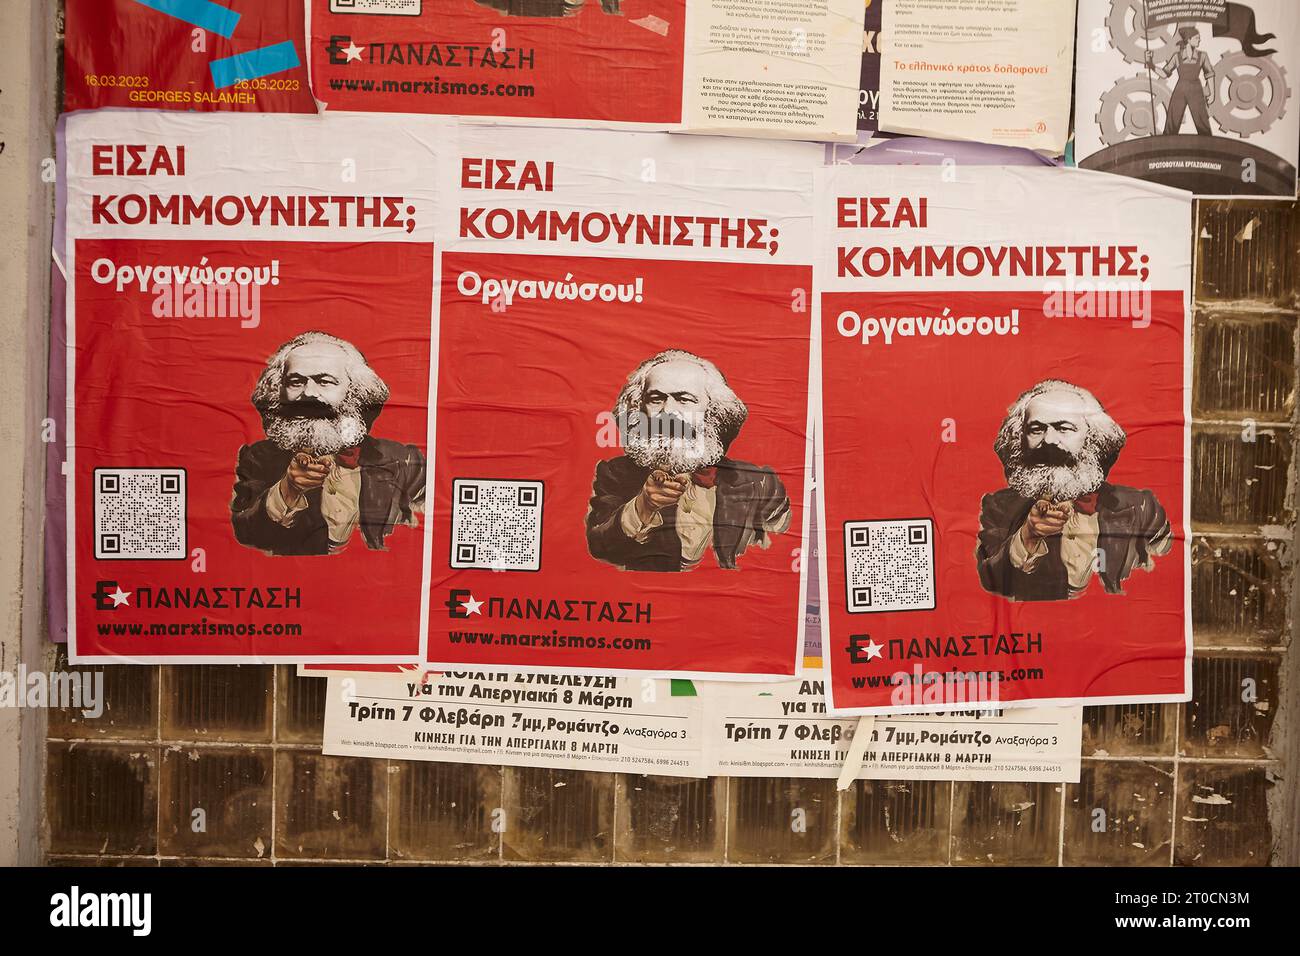 Greek Communist Party, karl marx poster Stock Photo